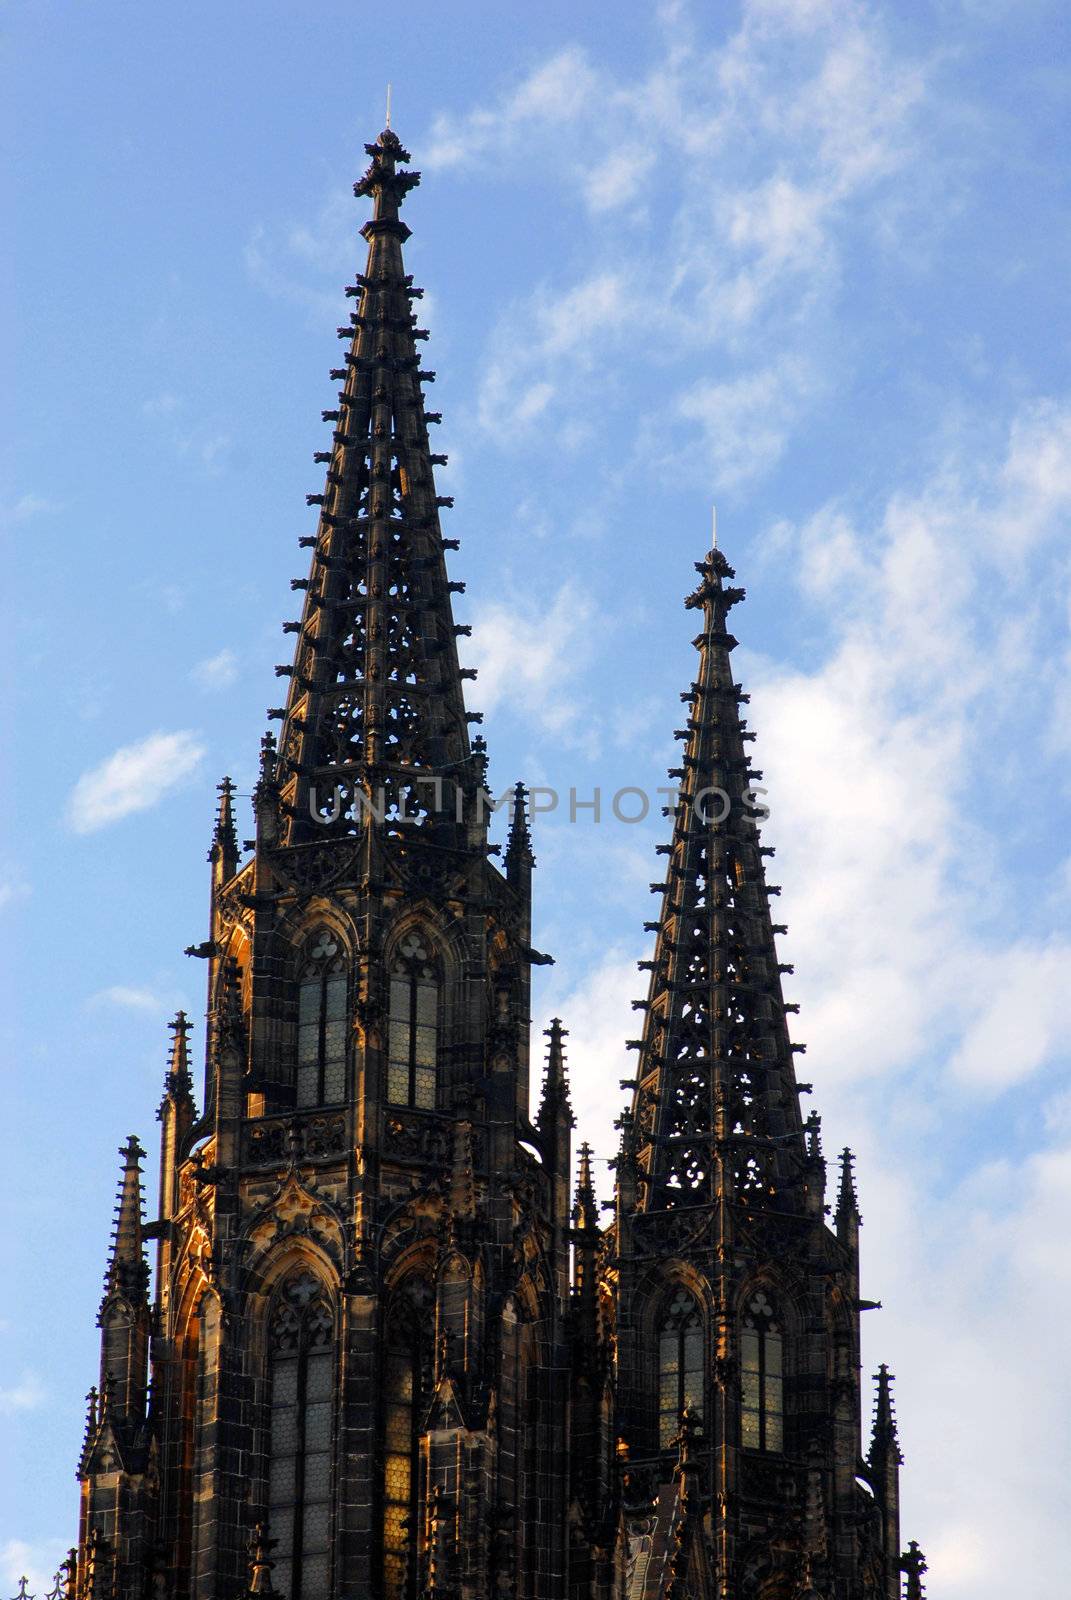 Gothic church towers in a blue sky. Prague.